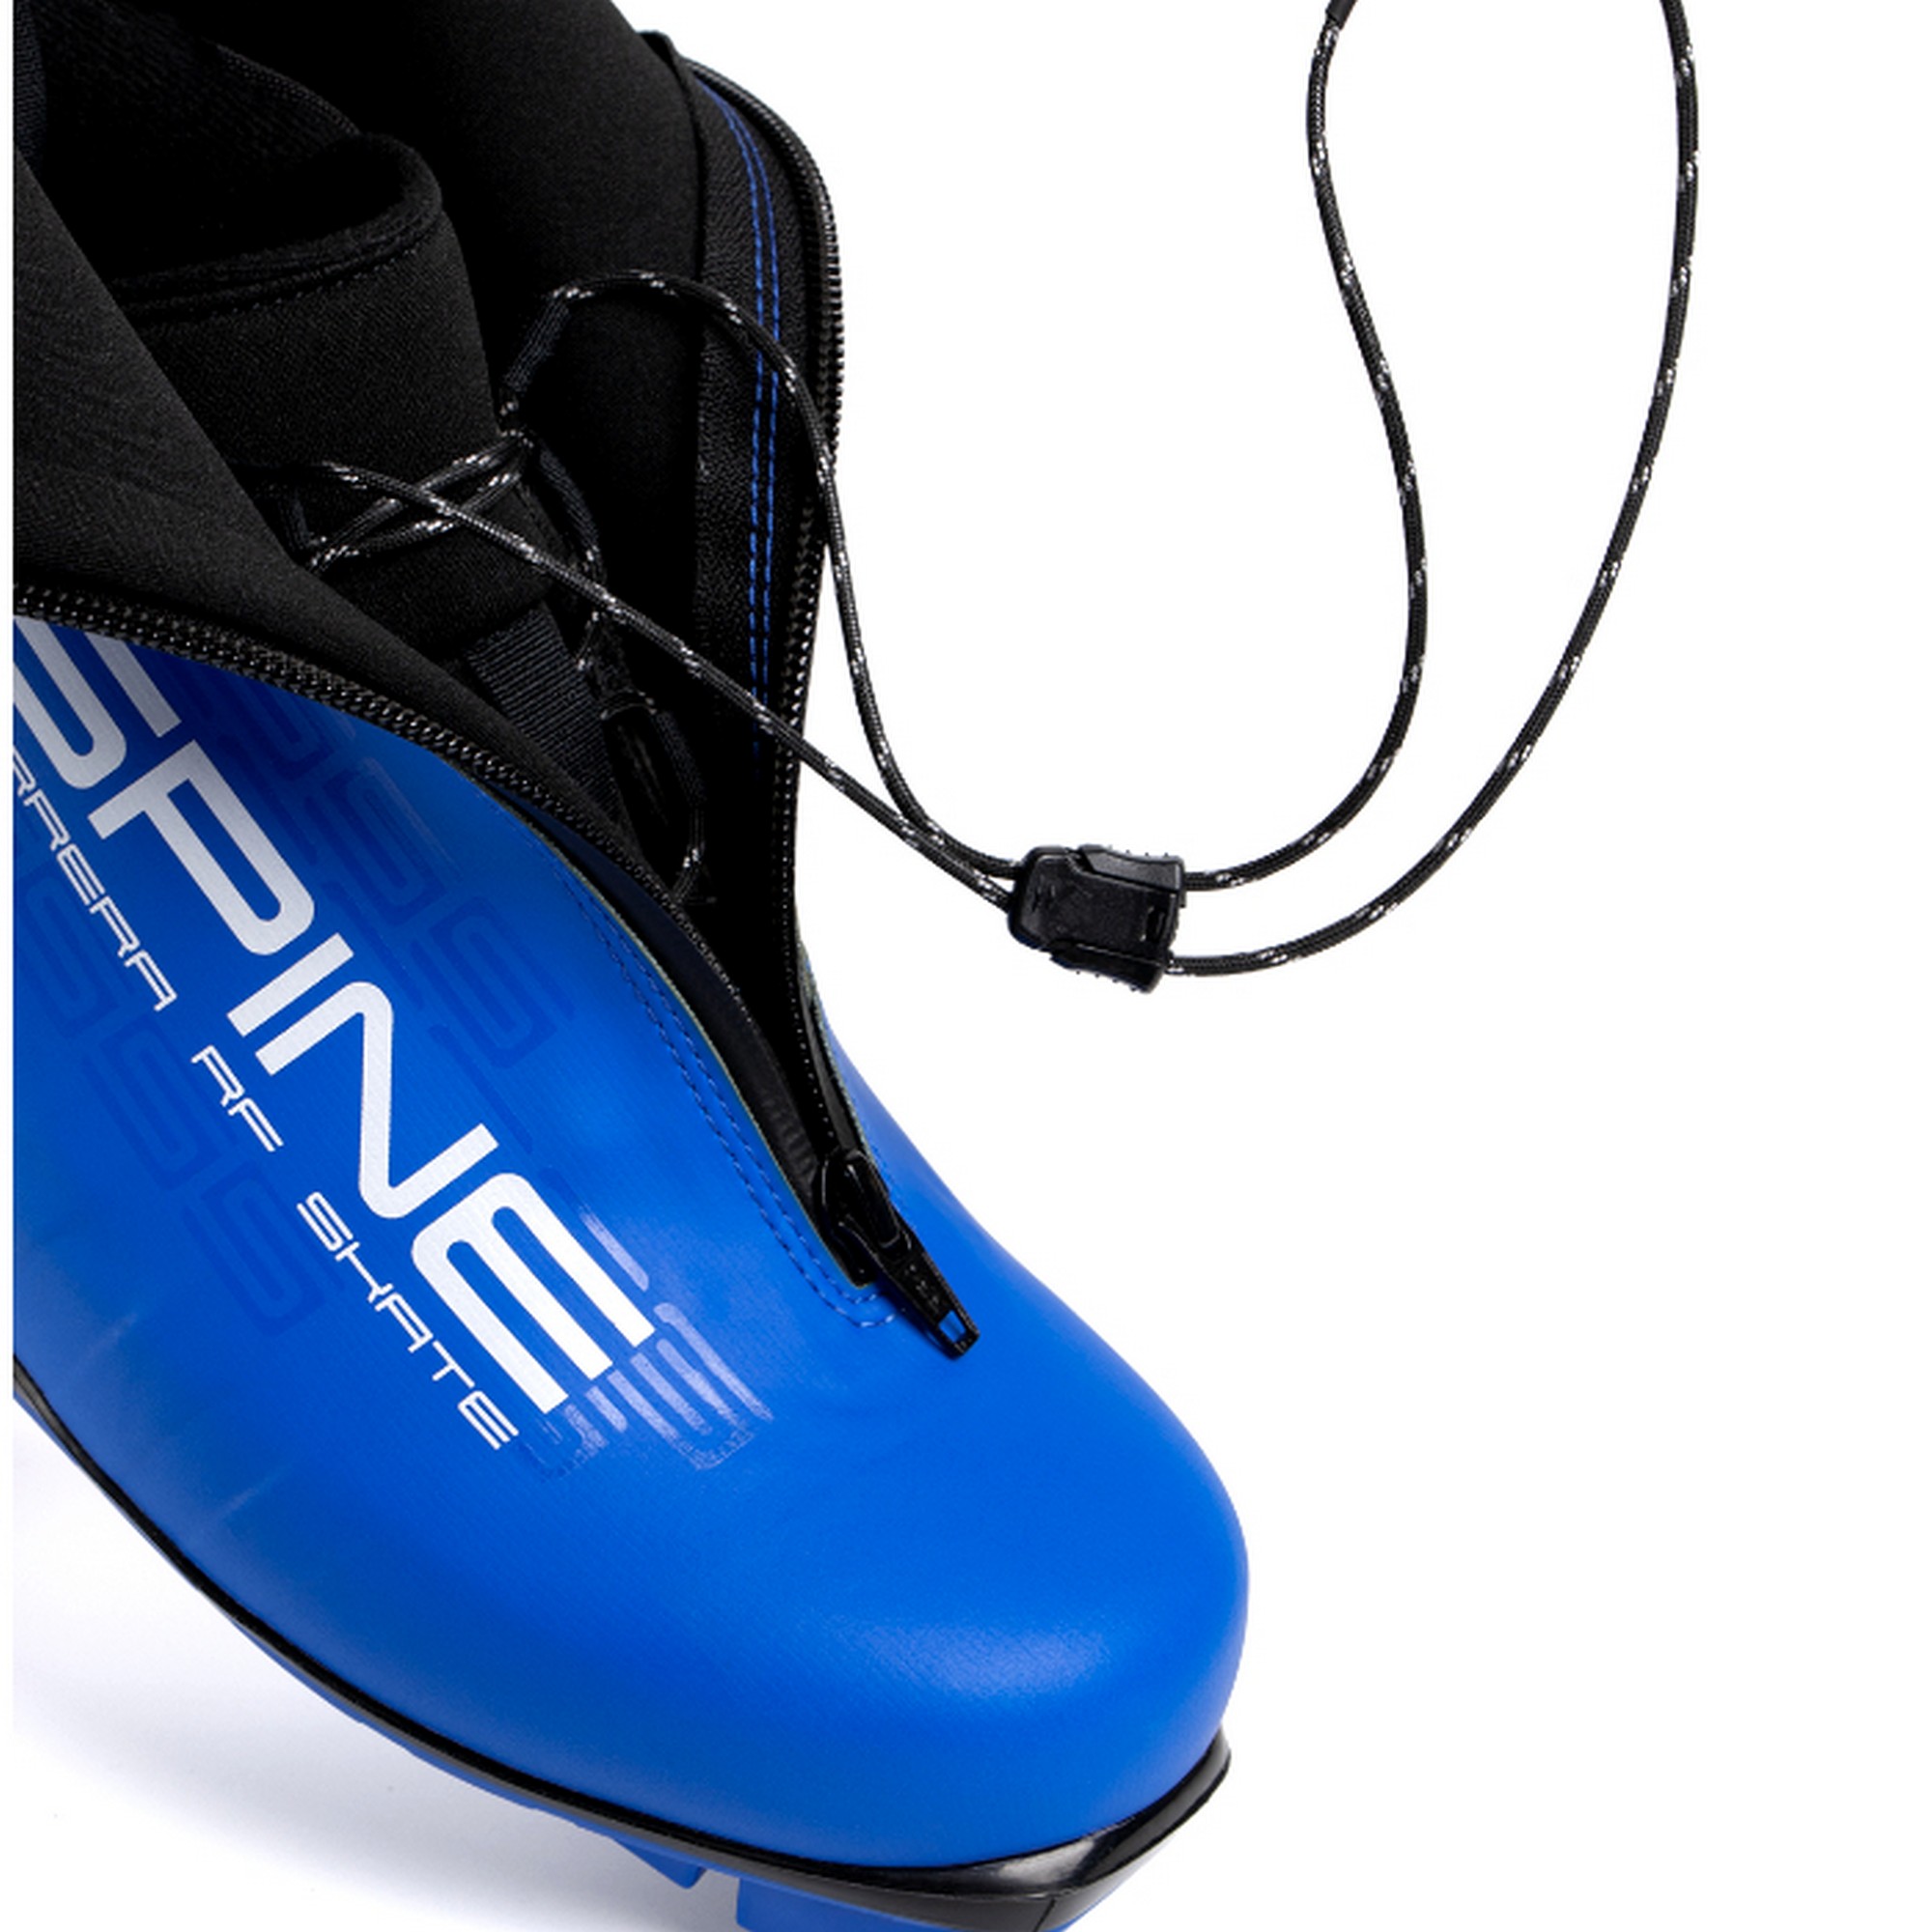 Лыжные ботинки Spine NNN Carrera RF Skate (526/1 M) синий 2000_2000